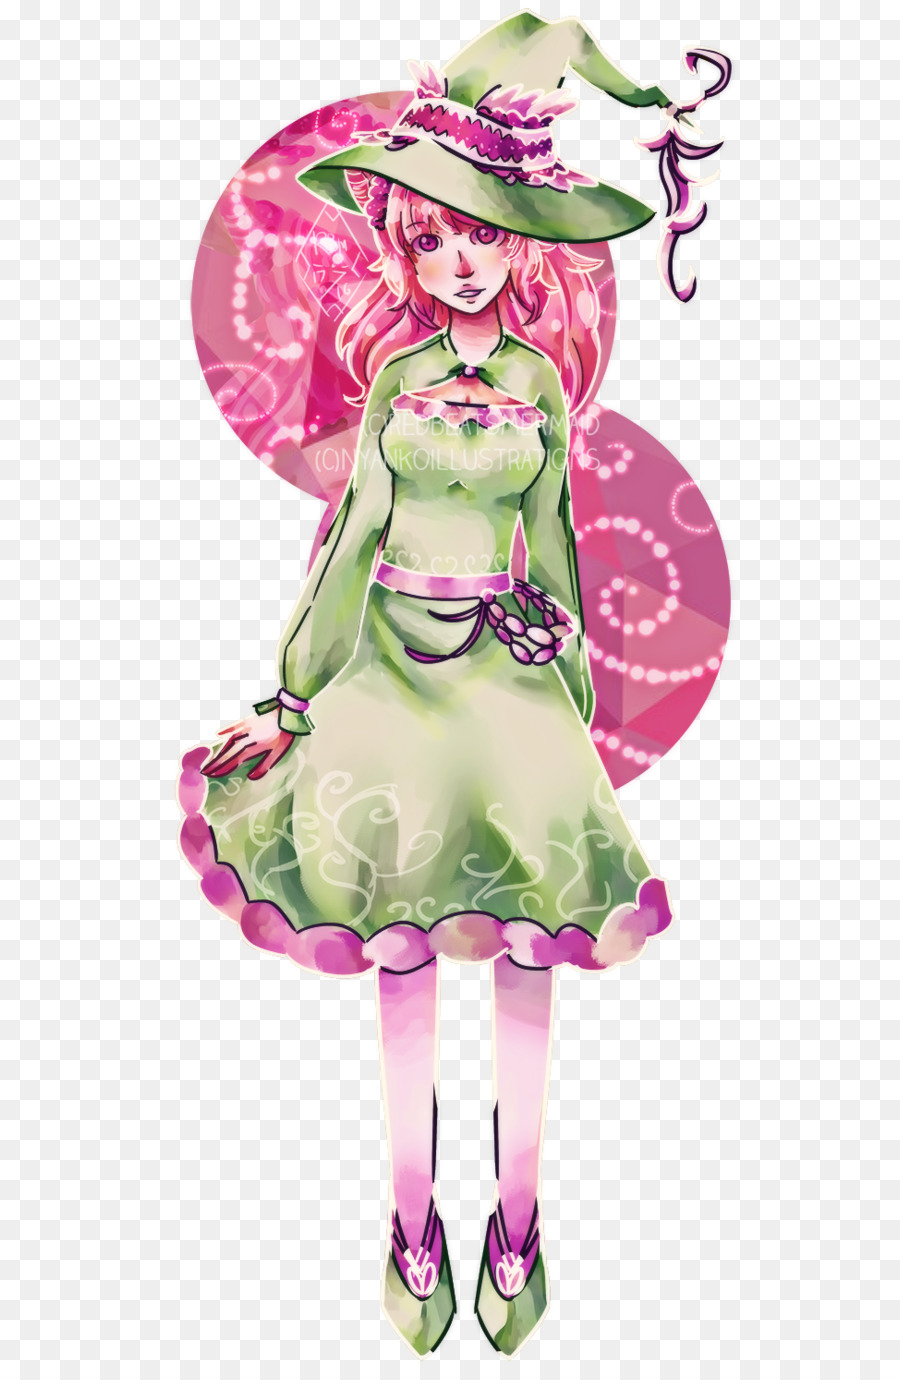 Kostüm design Grün Legendäre Kreatur - Meerjungfrau pink